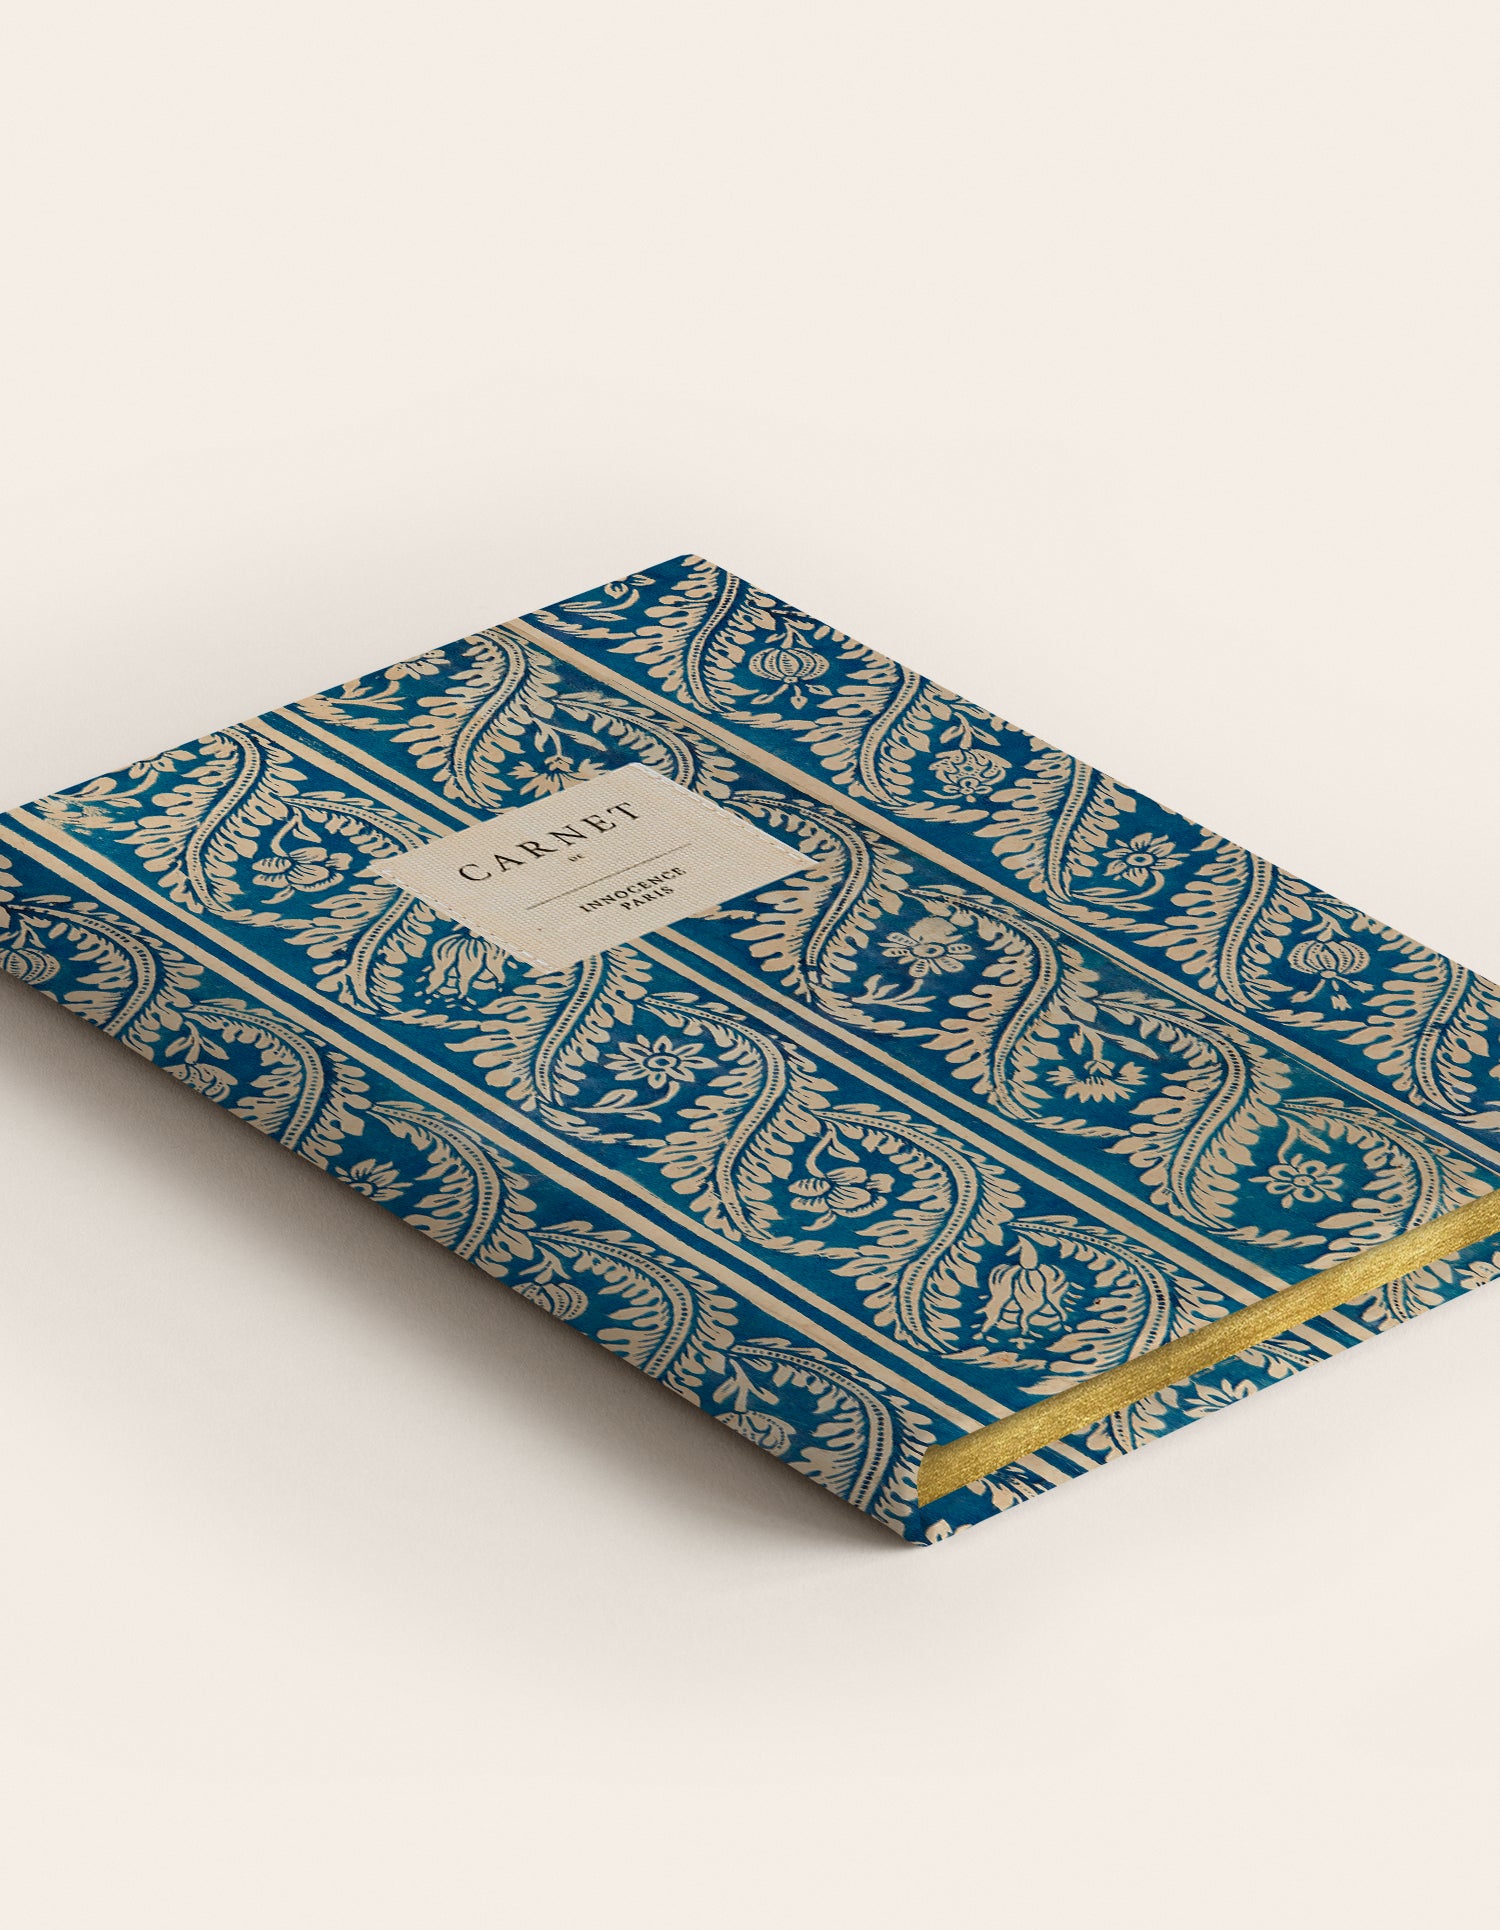 Royal Blue notebook